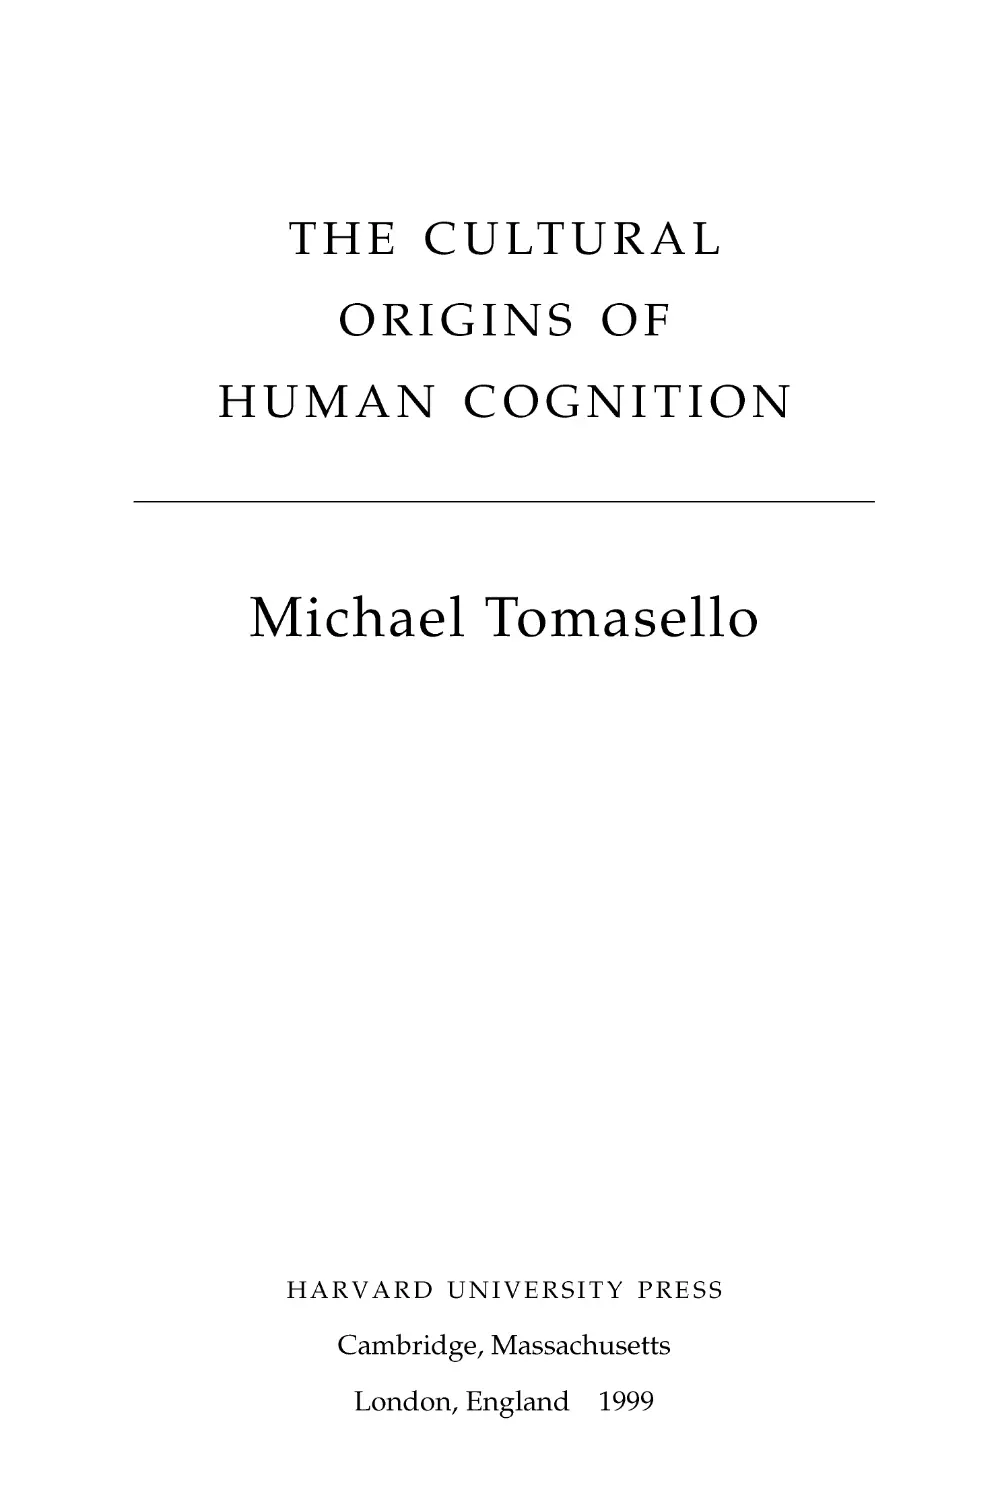 CULTURAL ORIGINS OF HUMAN COGNITION